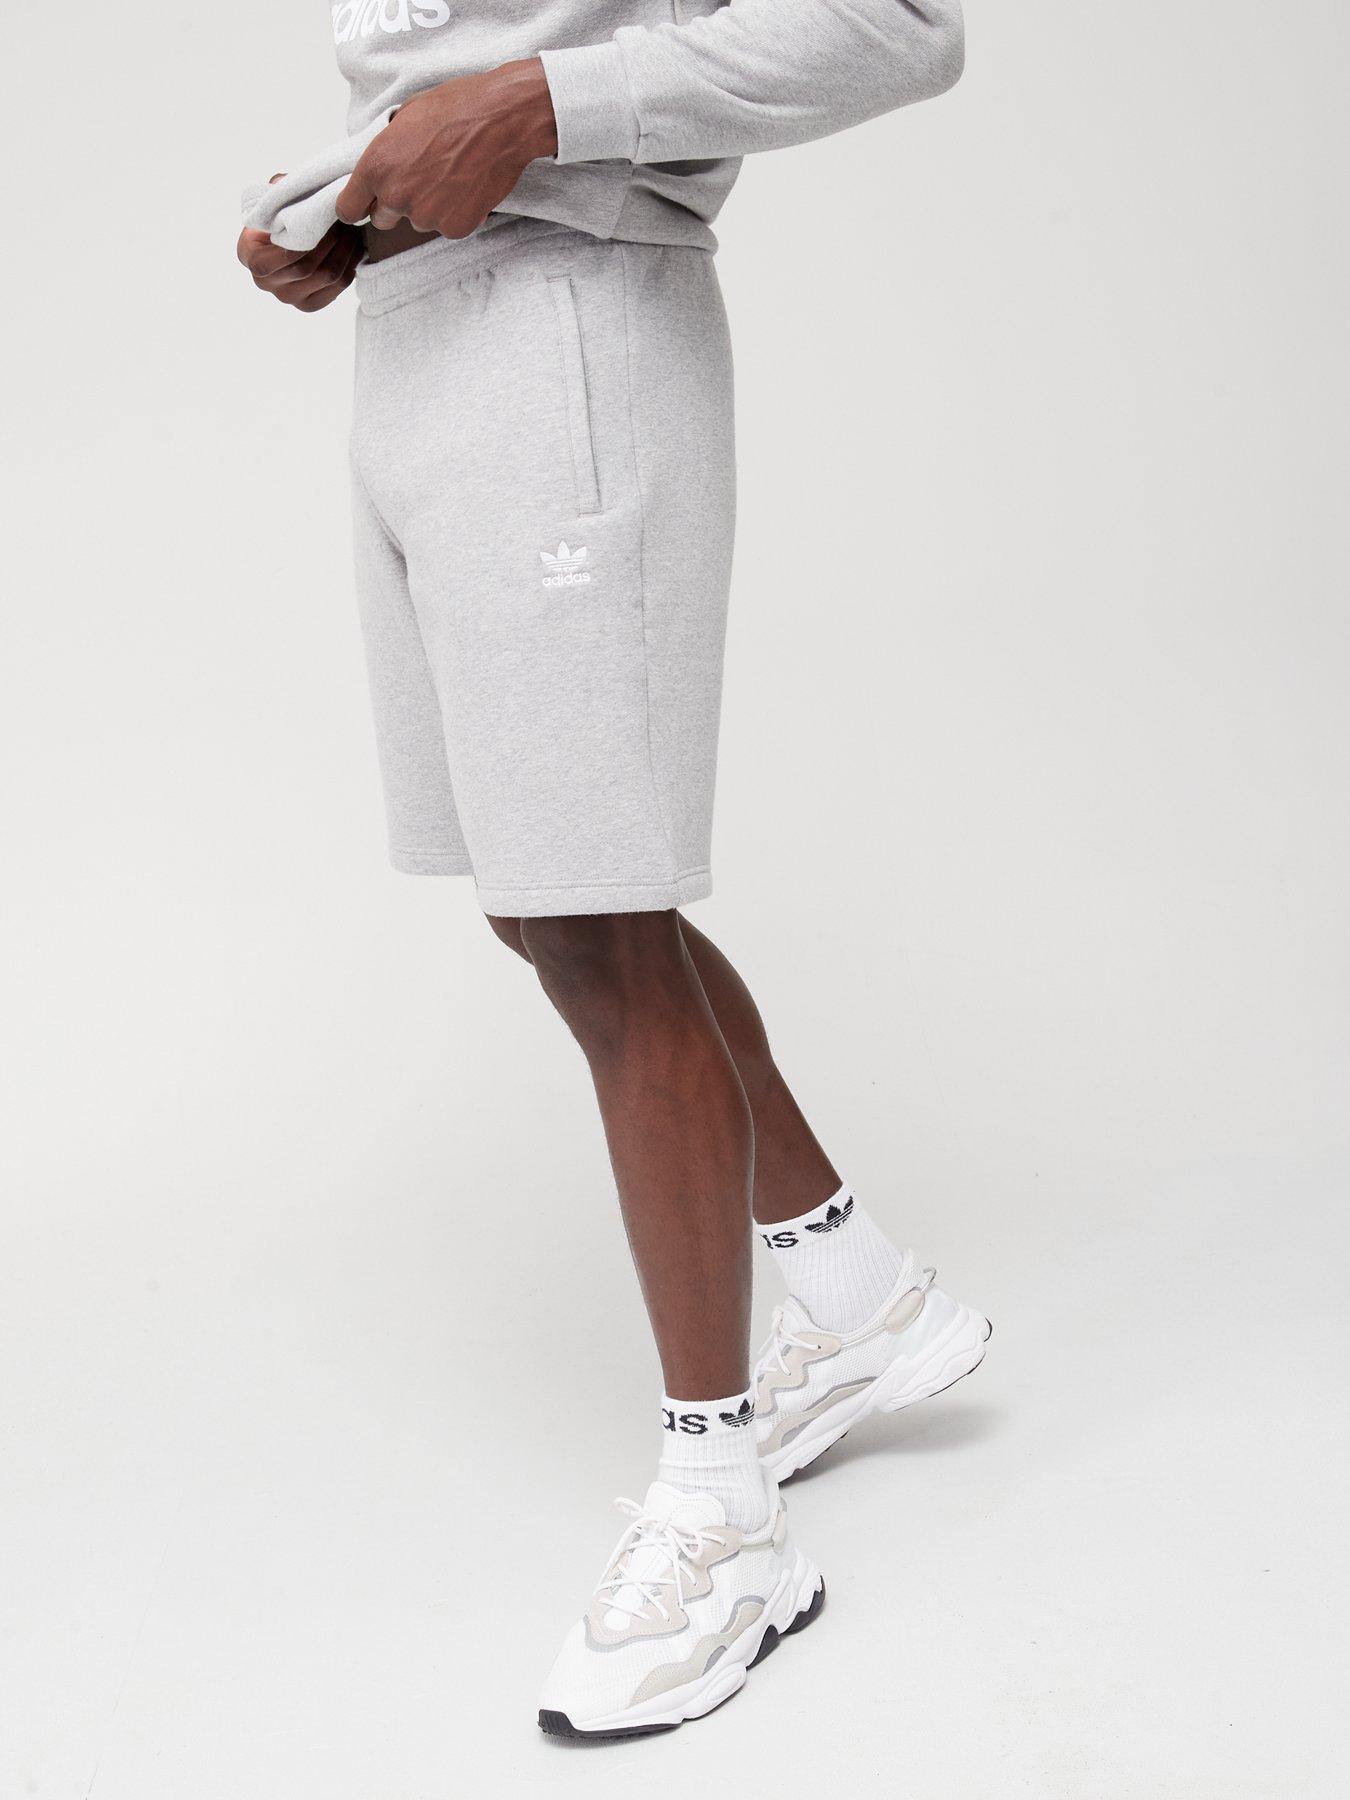 | Shorts Men originals | | Very Adidas Ireland